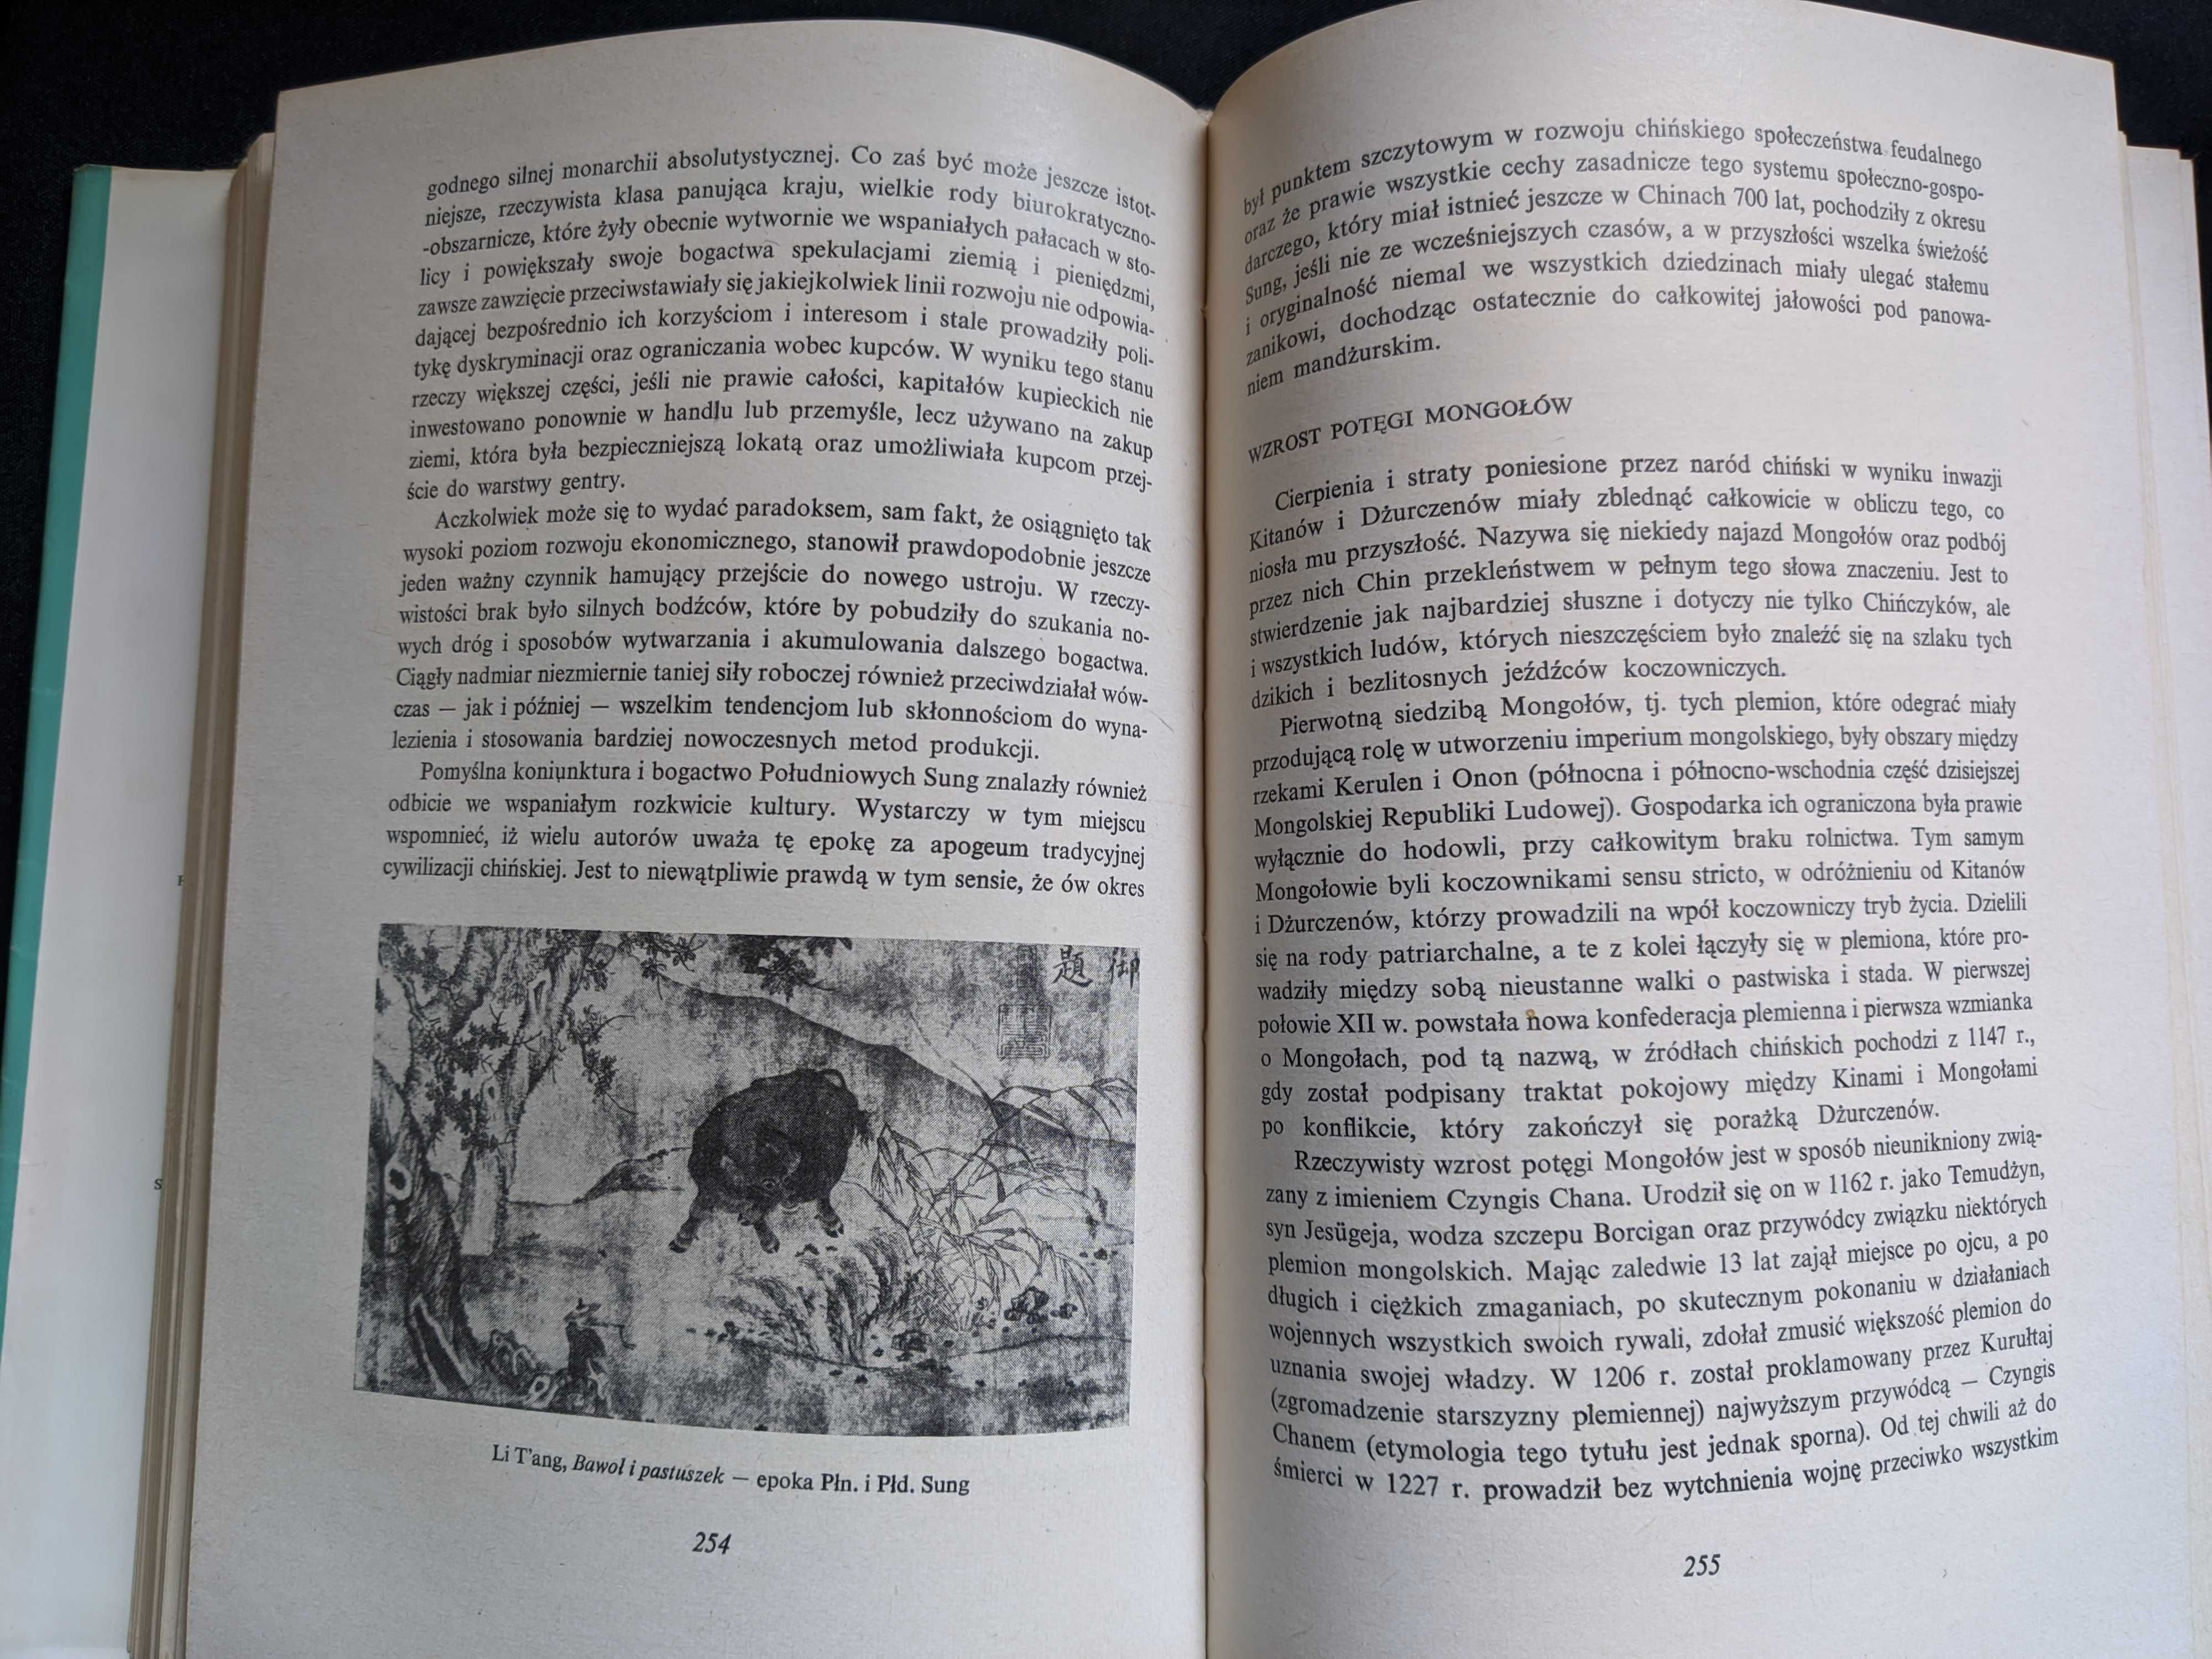 Historia Chin, Witold Rodziński, Ossolineum 1974